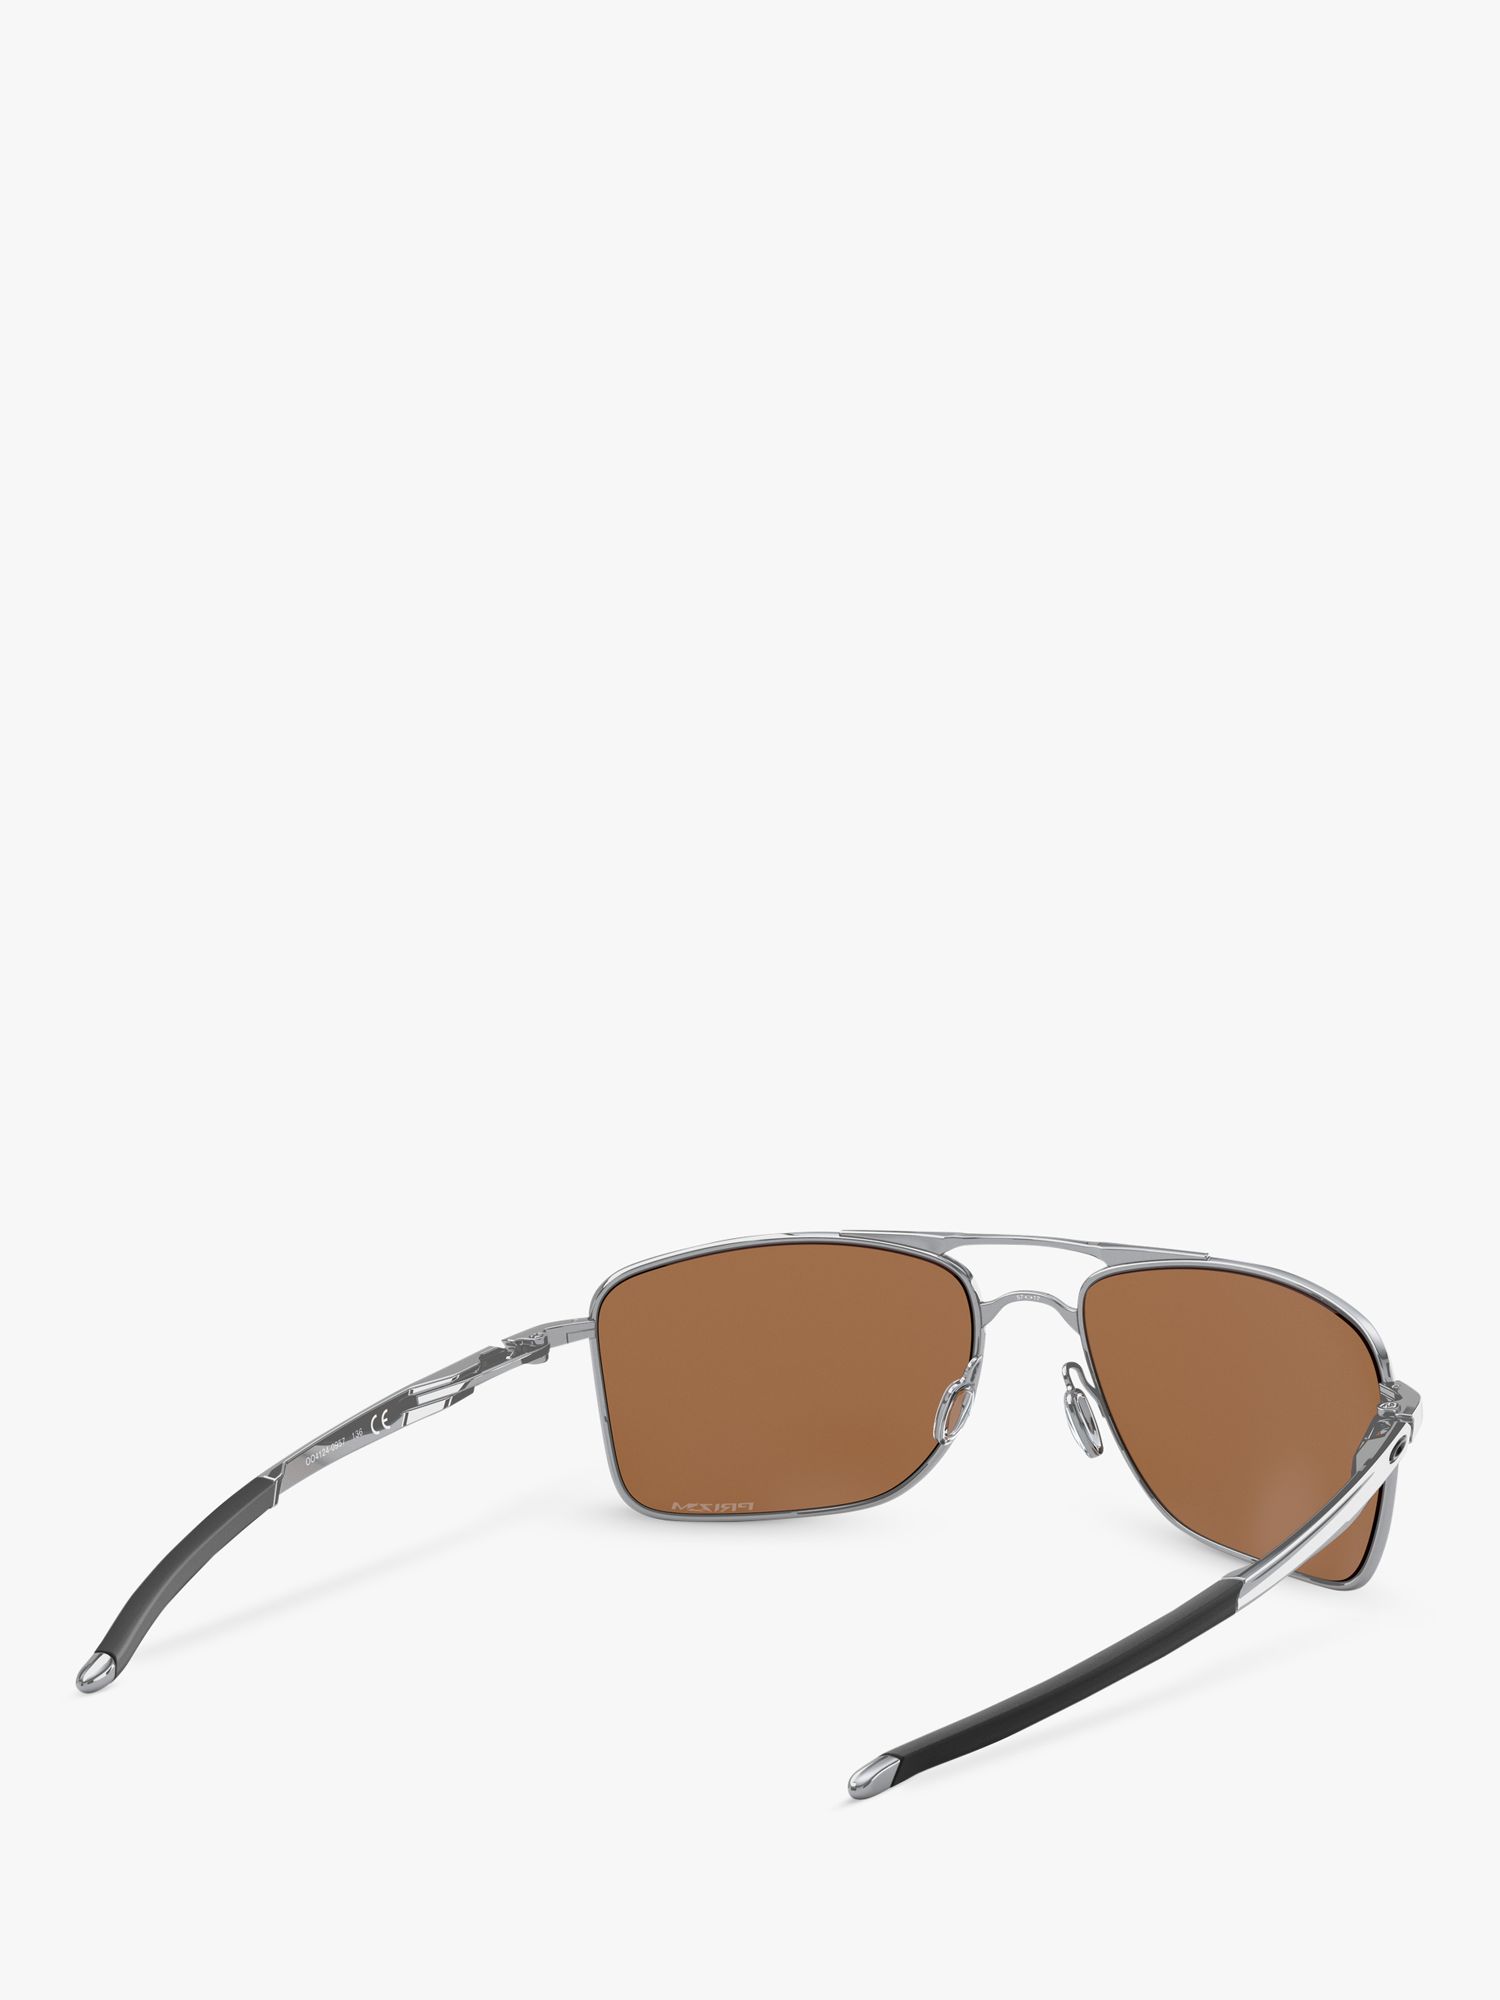 Oakley OO4124 Men's Rectangular Sunglasses, Brown/Silver